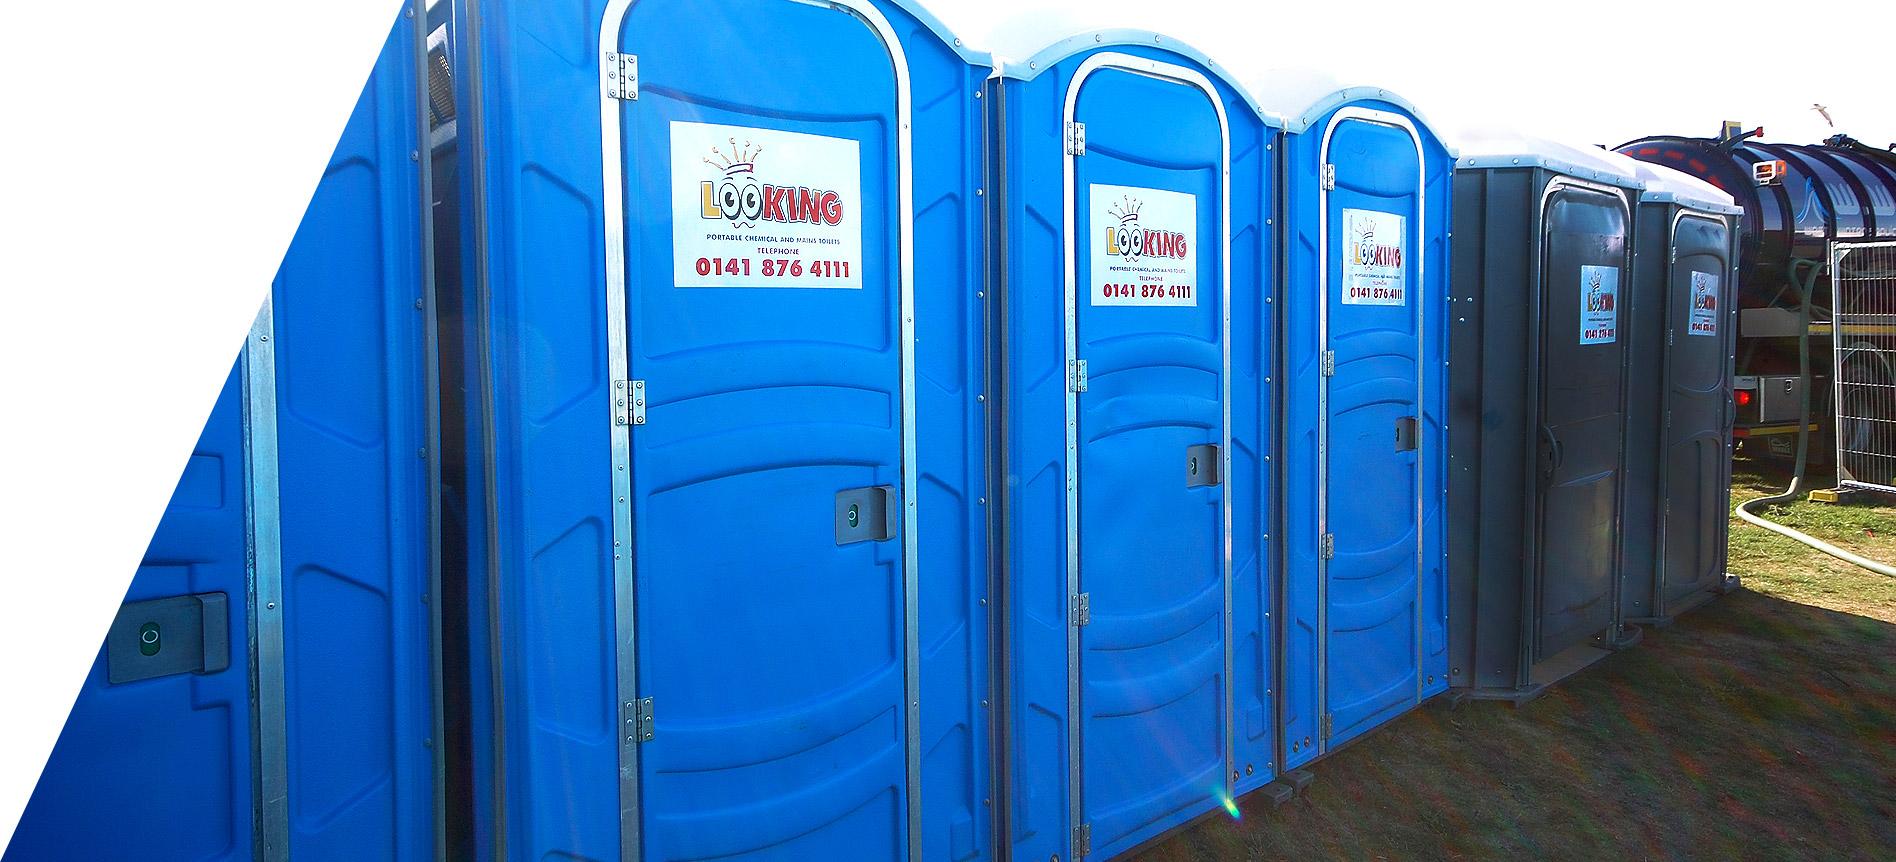 row of portable toilets